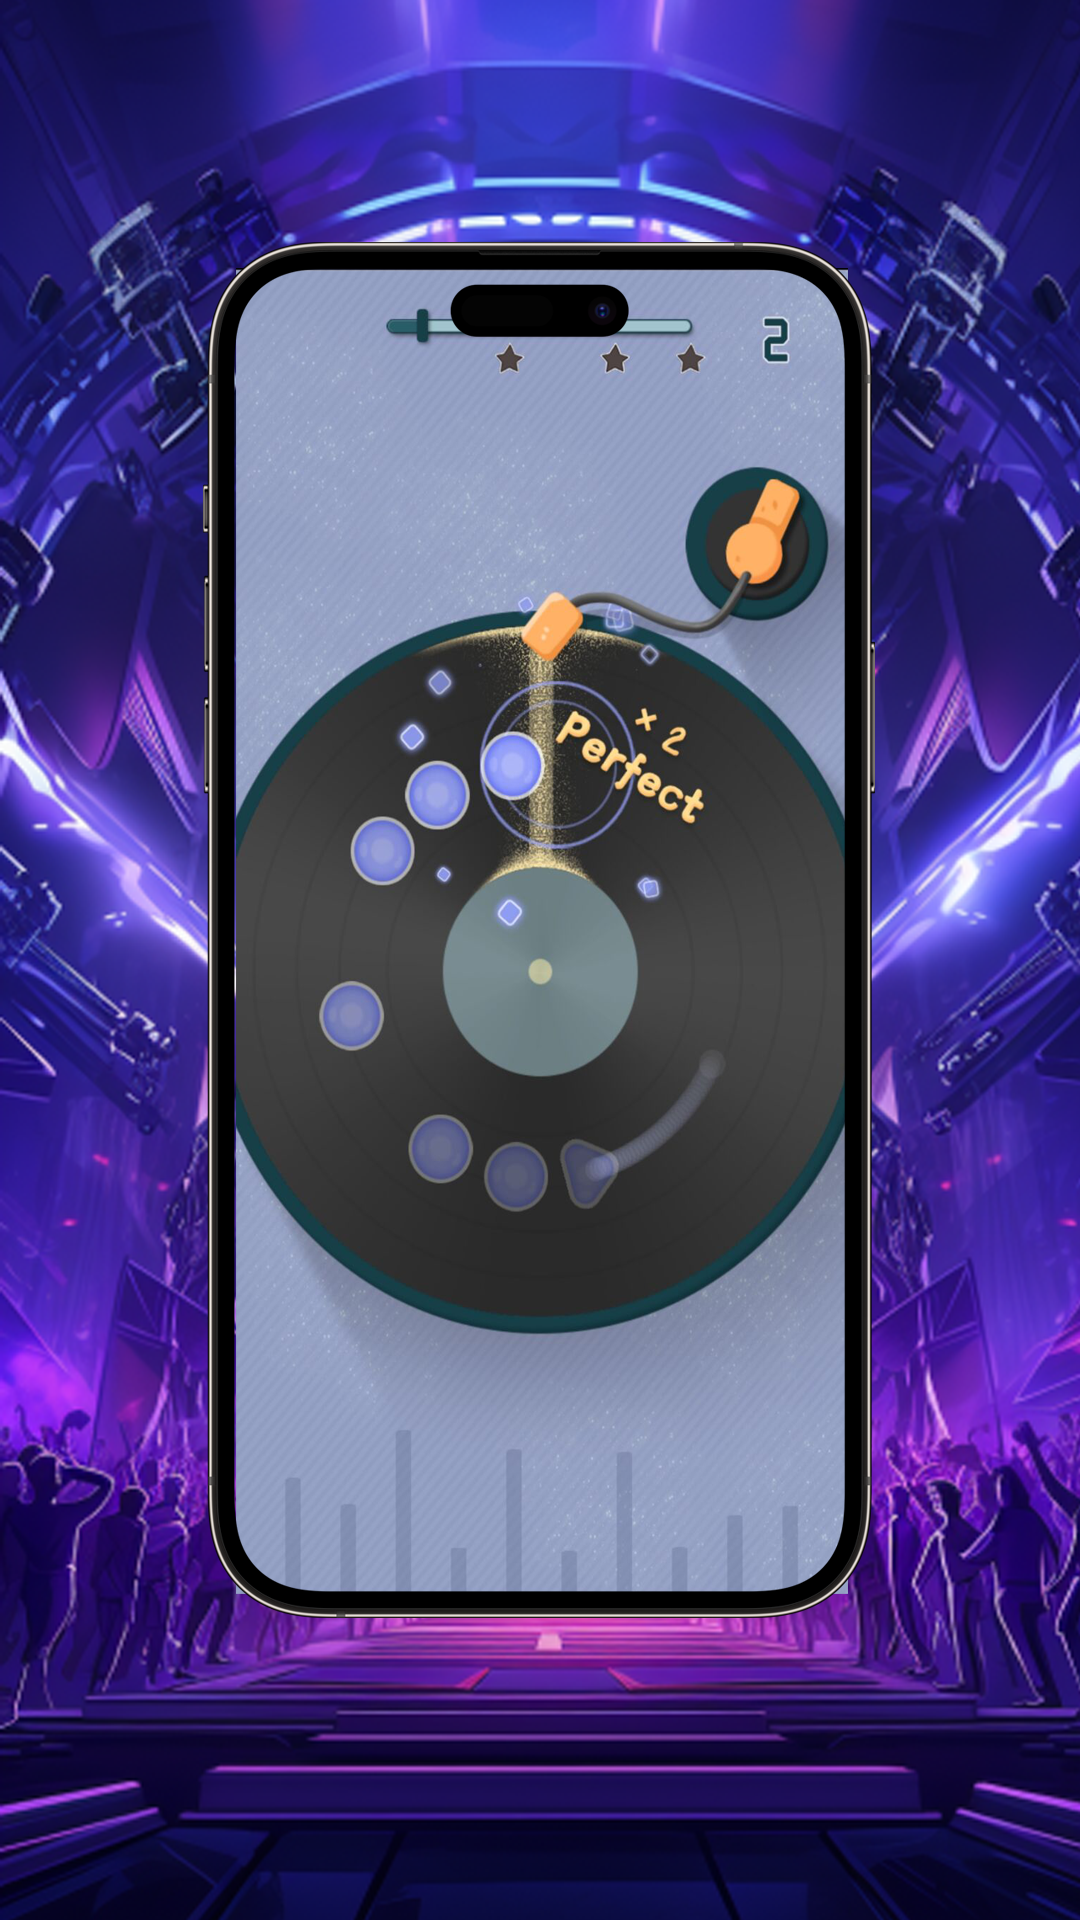 Rhythm record screenshot game